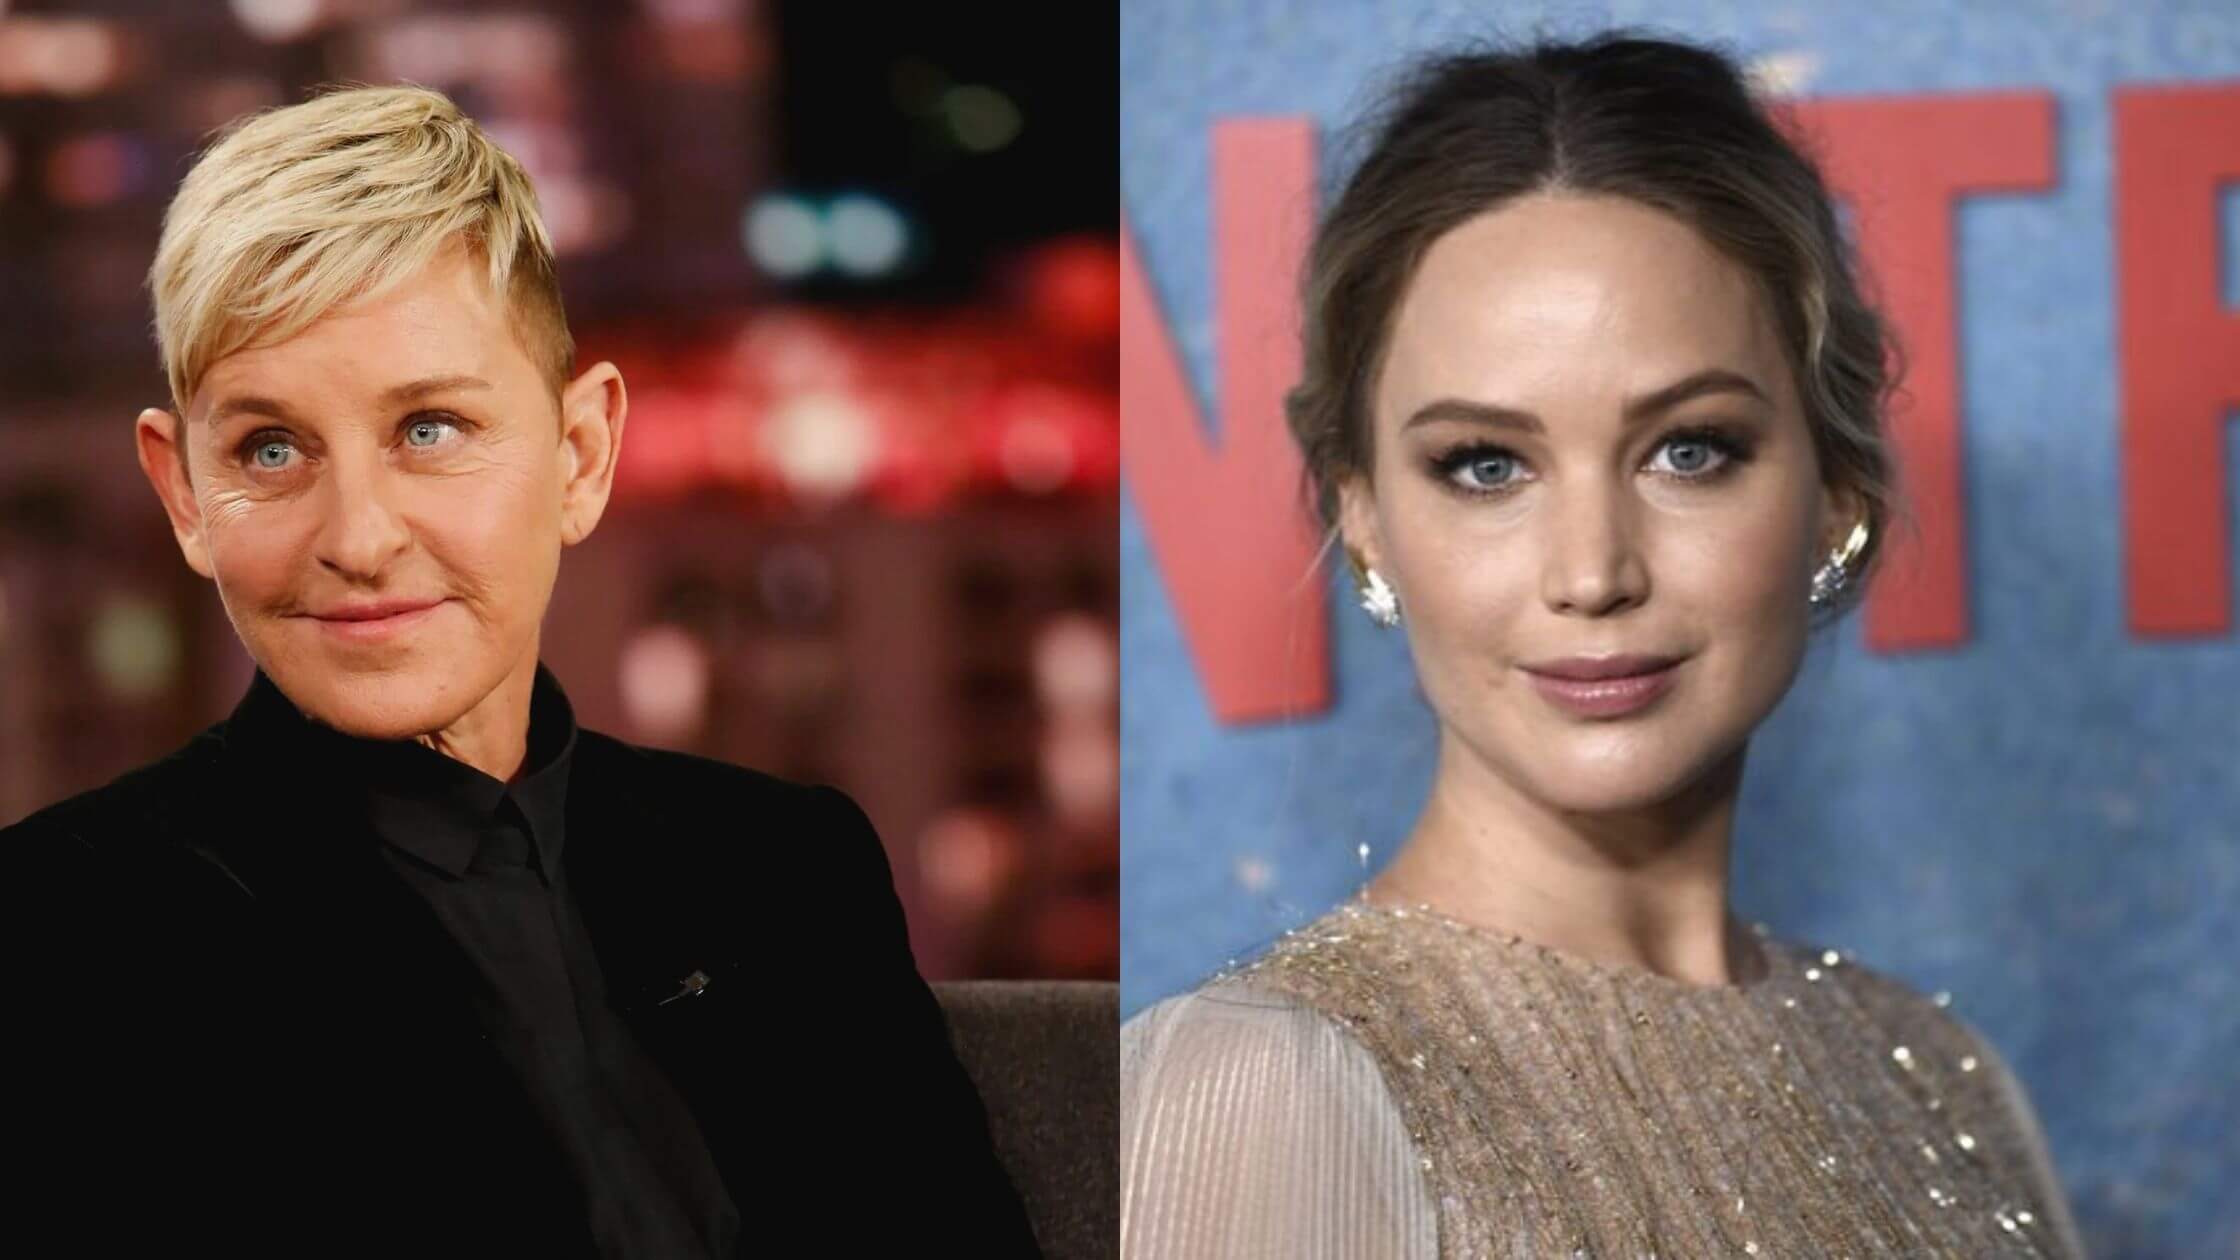 Ellen DeGeneres Accidentally Reveals The Gender Of Jennifer Lawrence's Baby